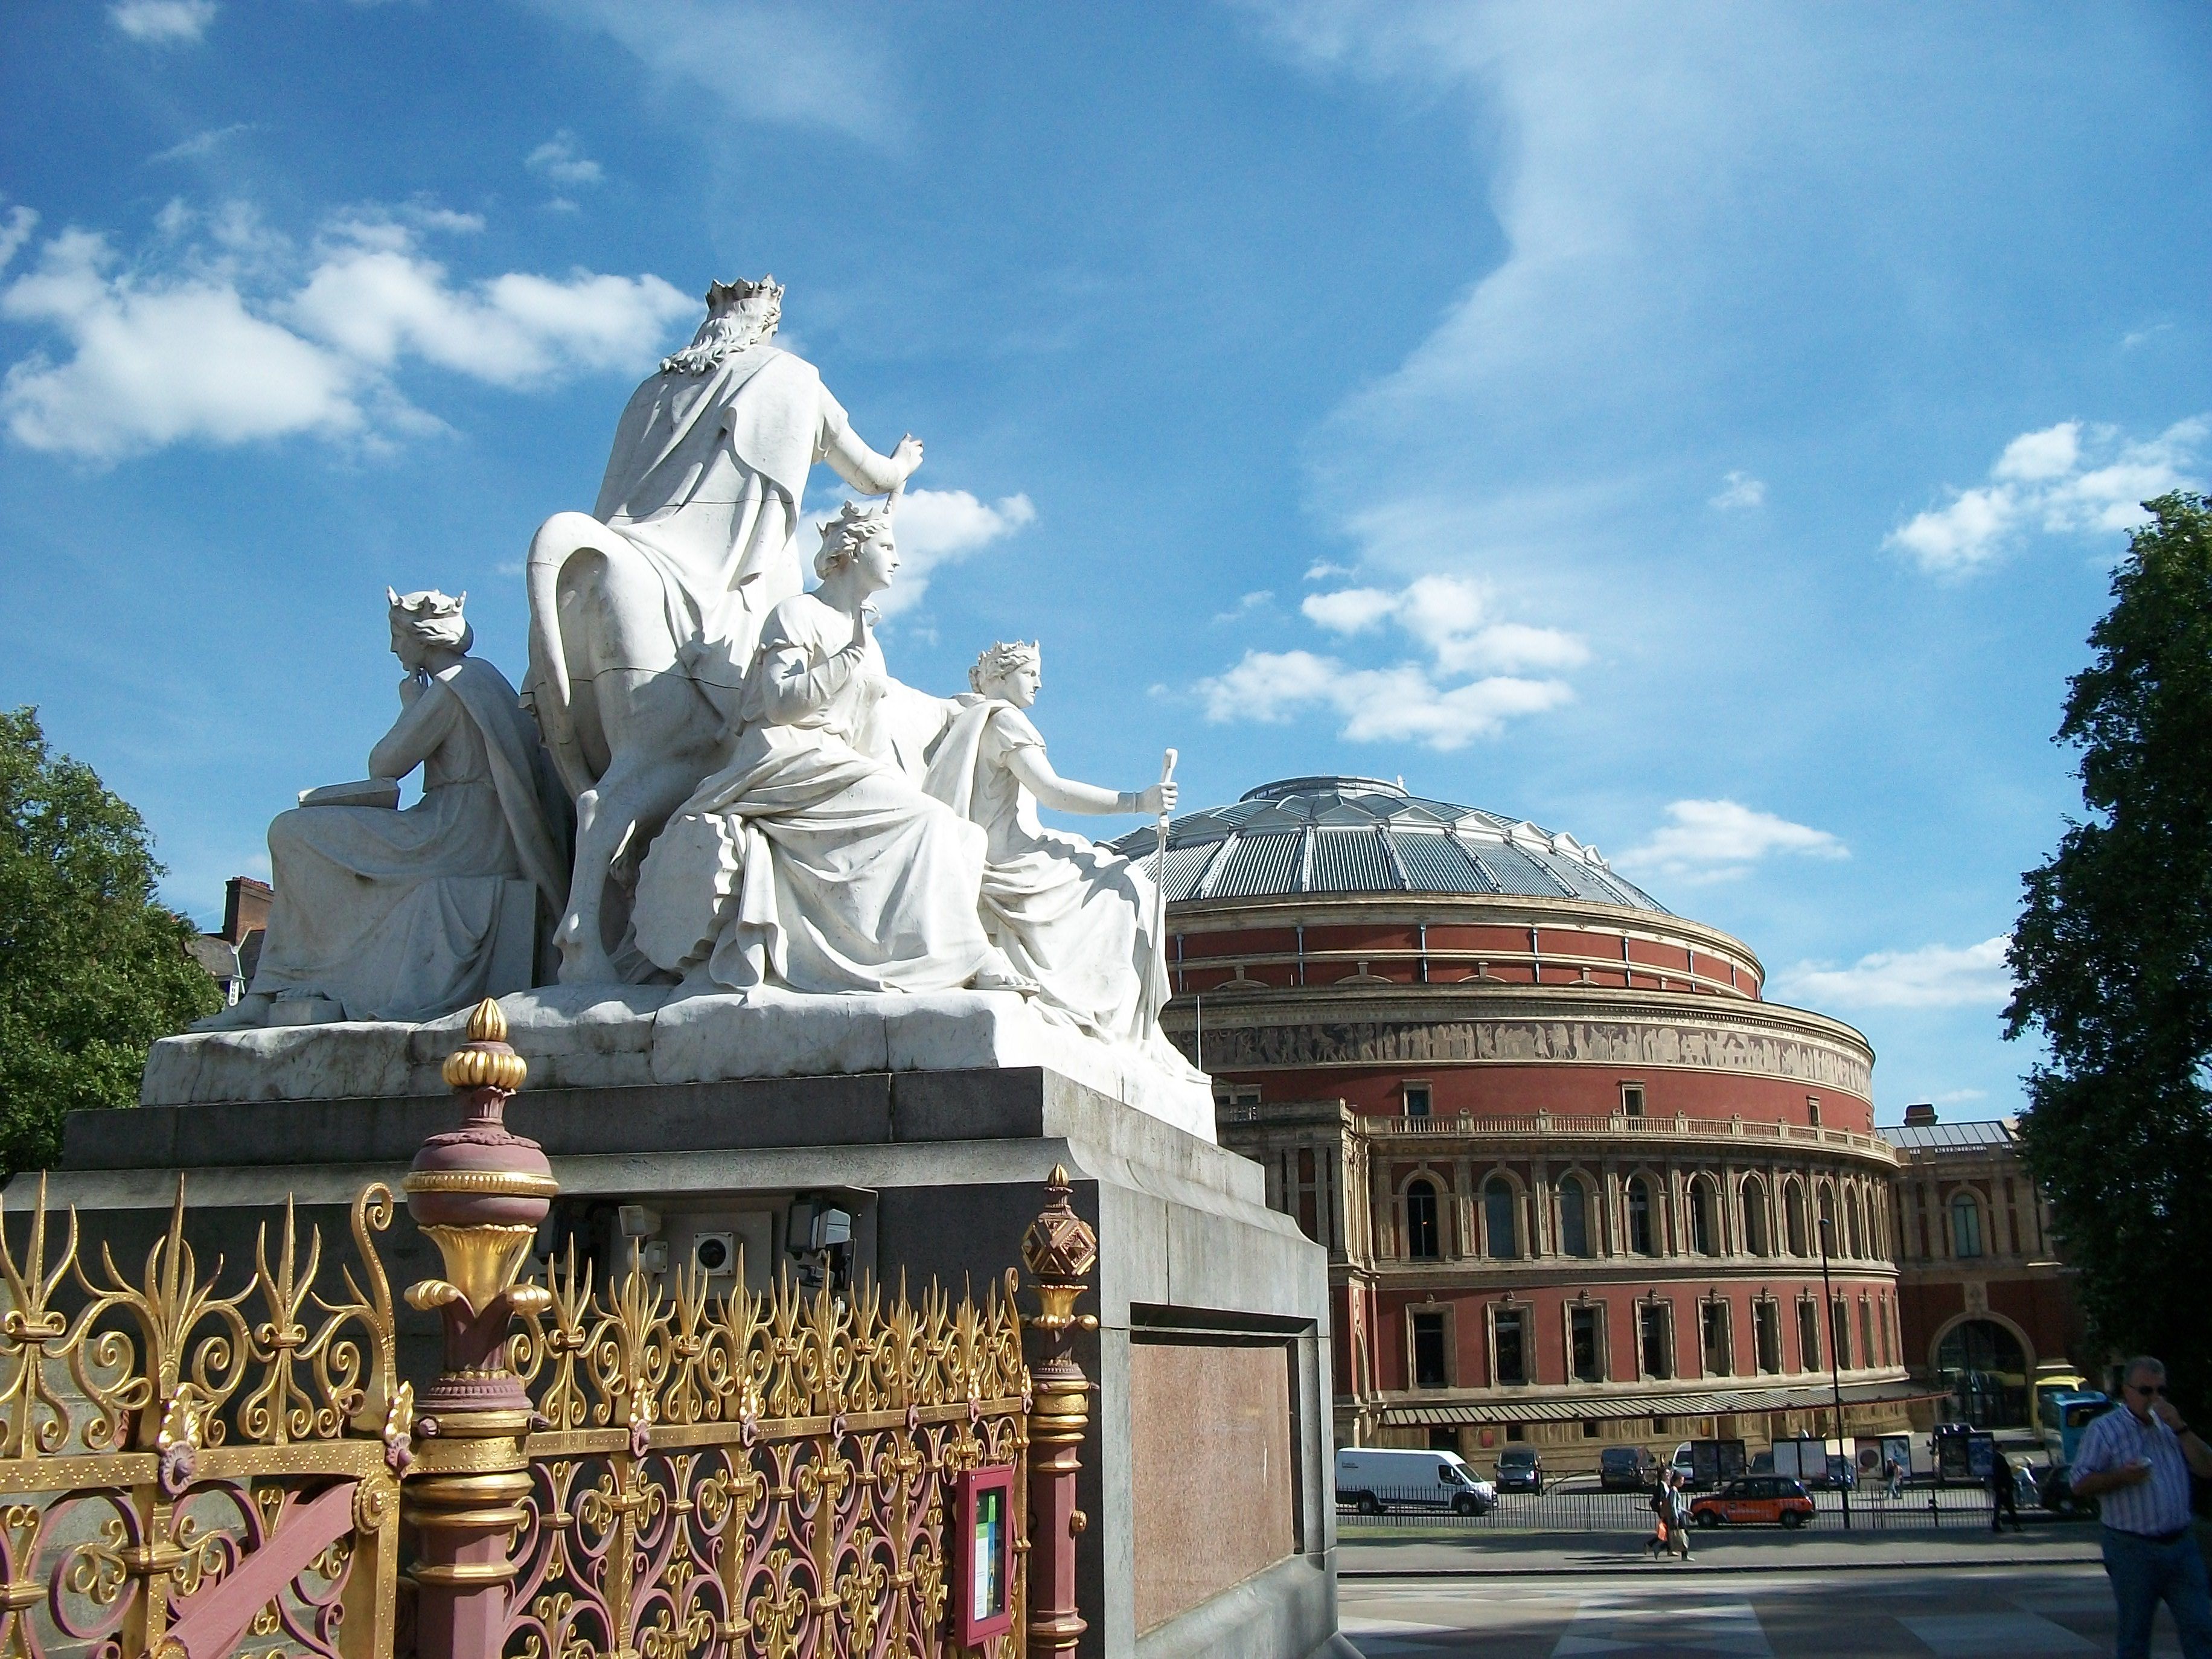 Royal Albert Hall seen from the Albert Memorial